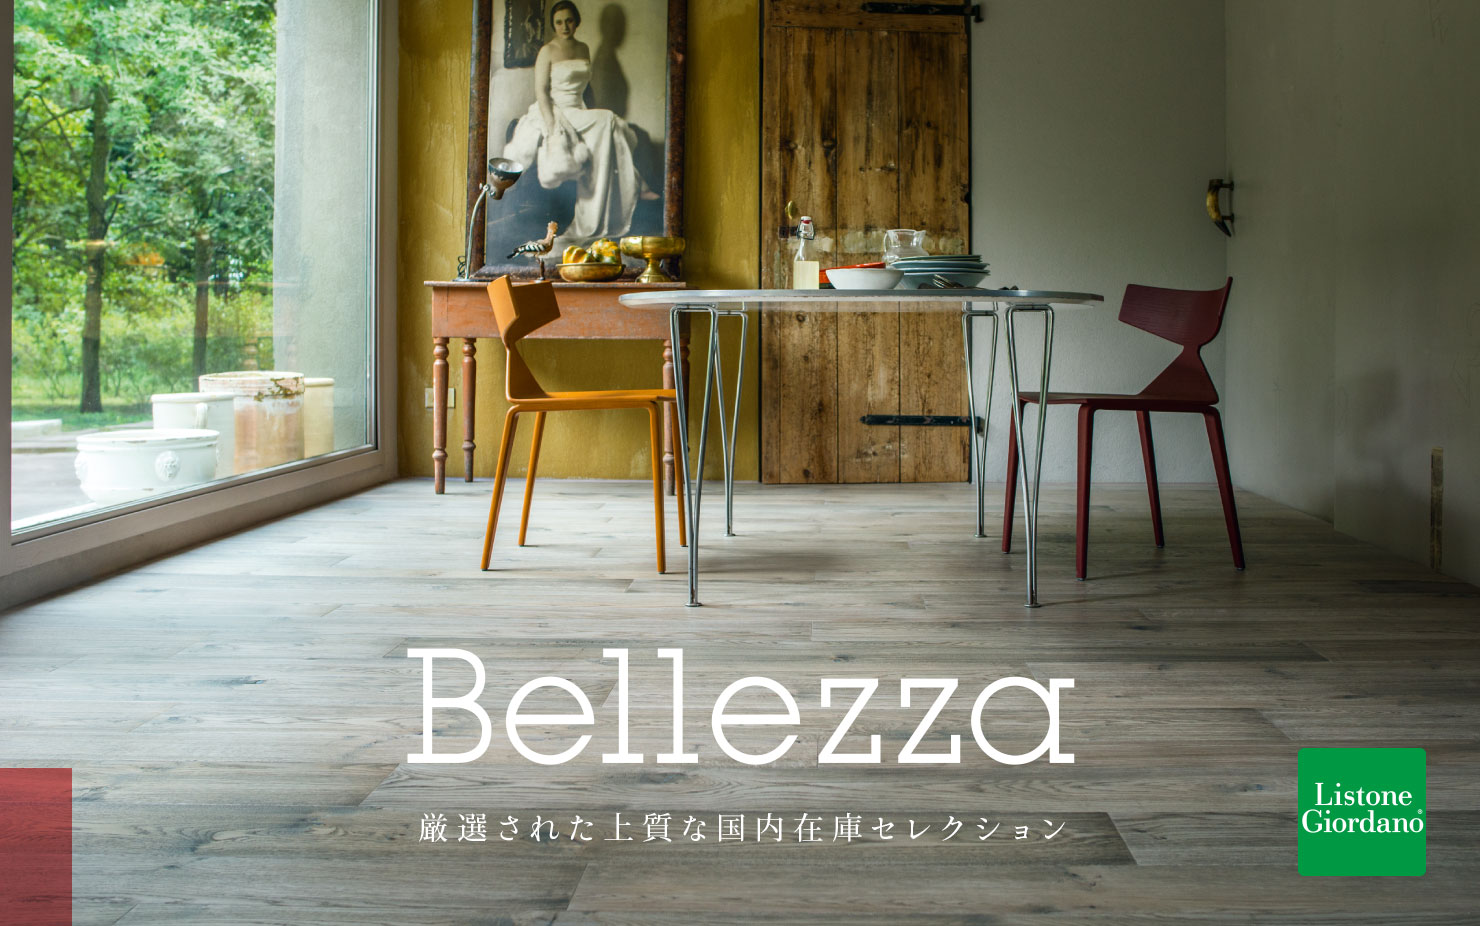 Bellezza 厳選された上質な国内在庫セレクション